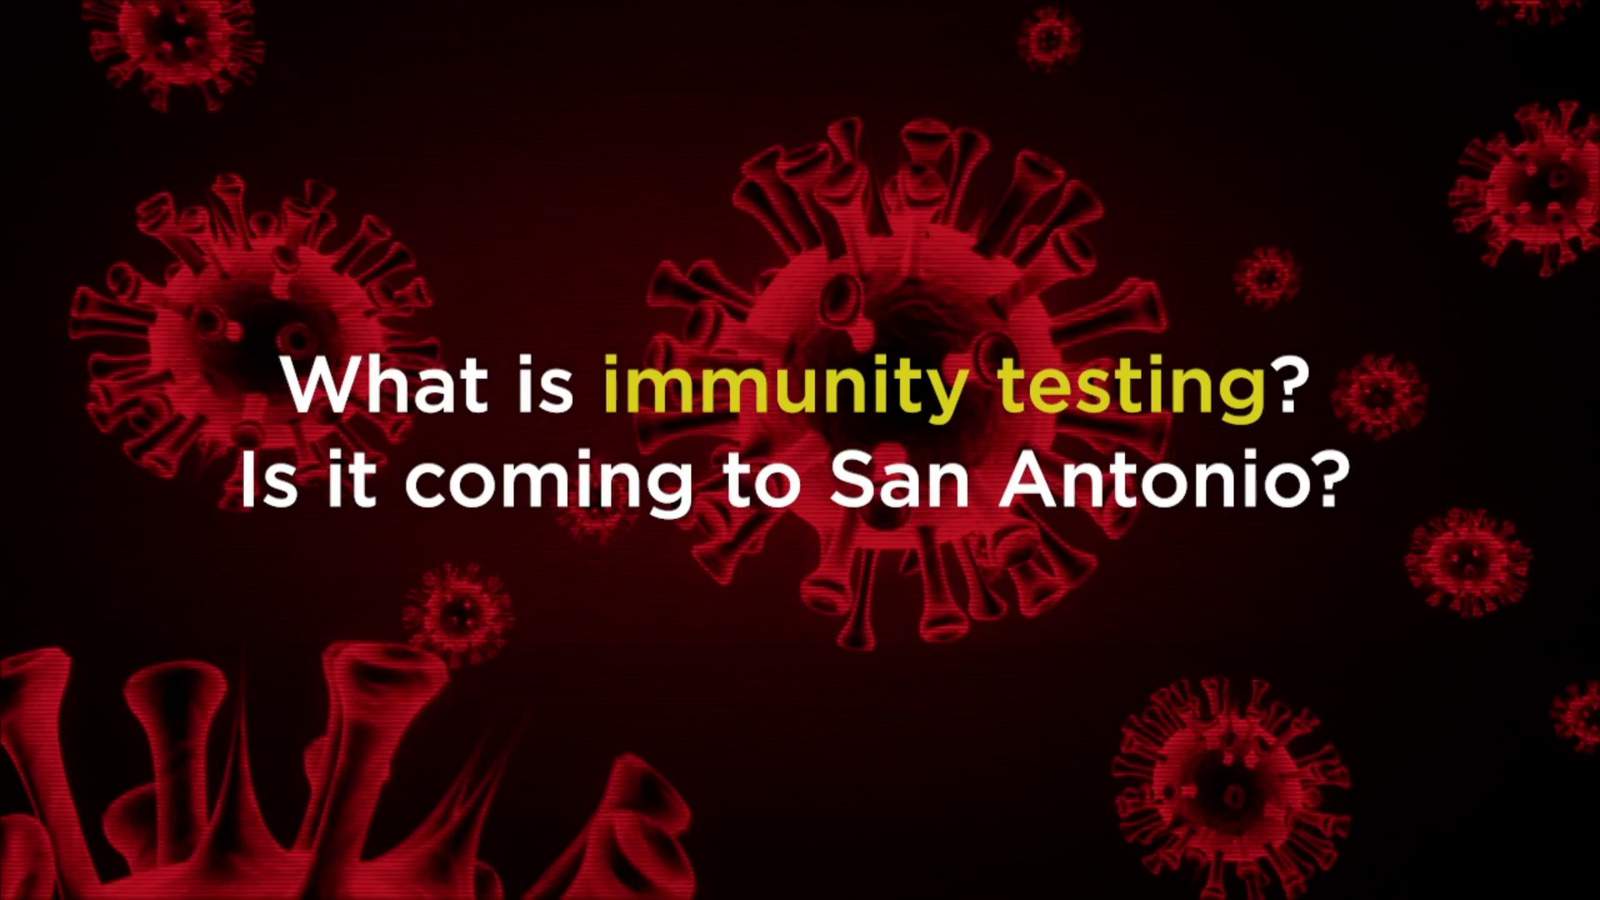 SAQ: What is immunity testing?